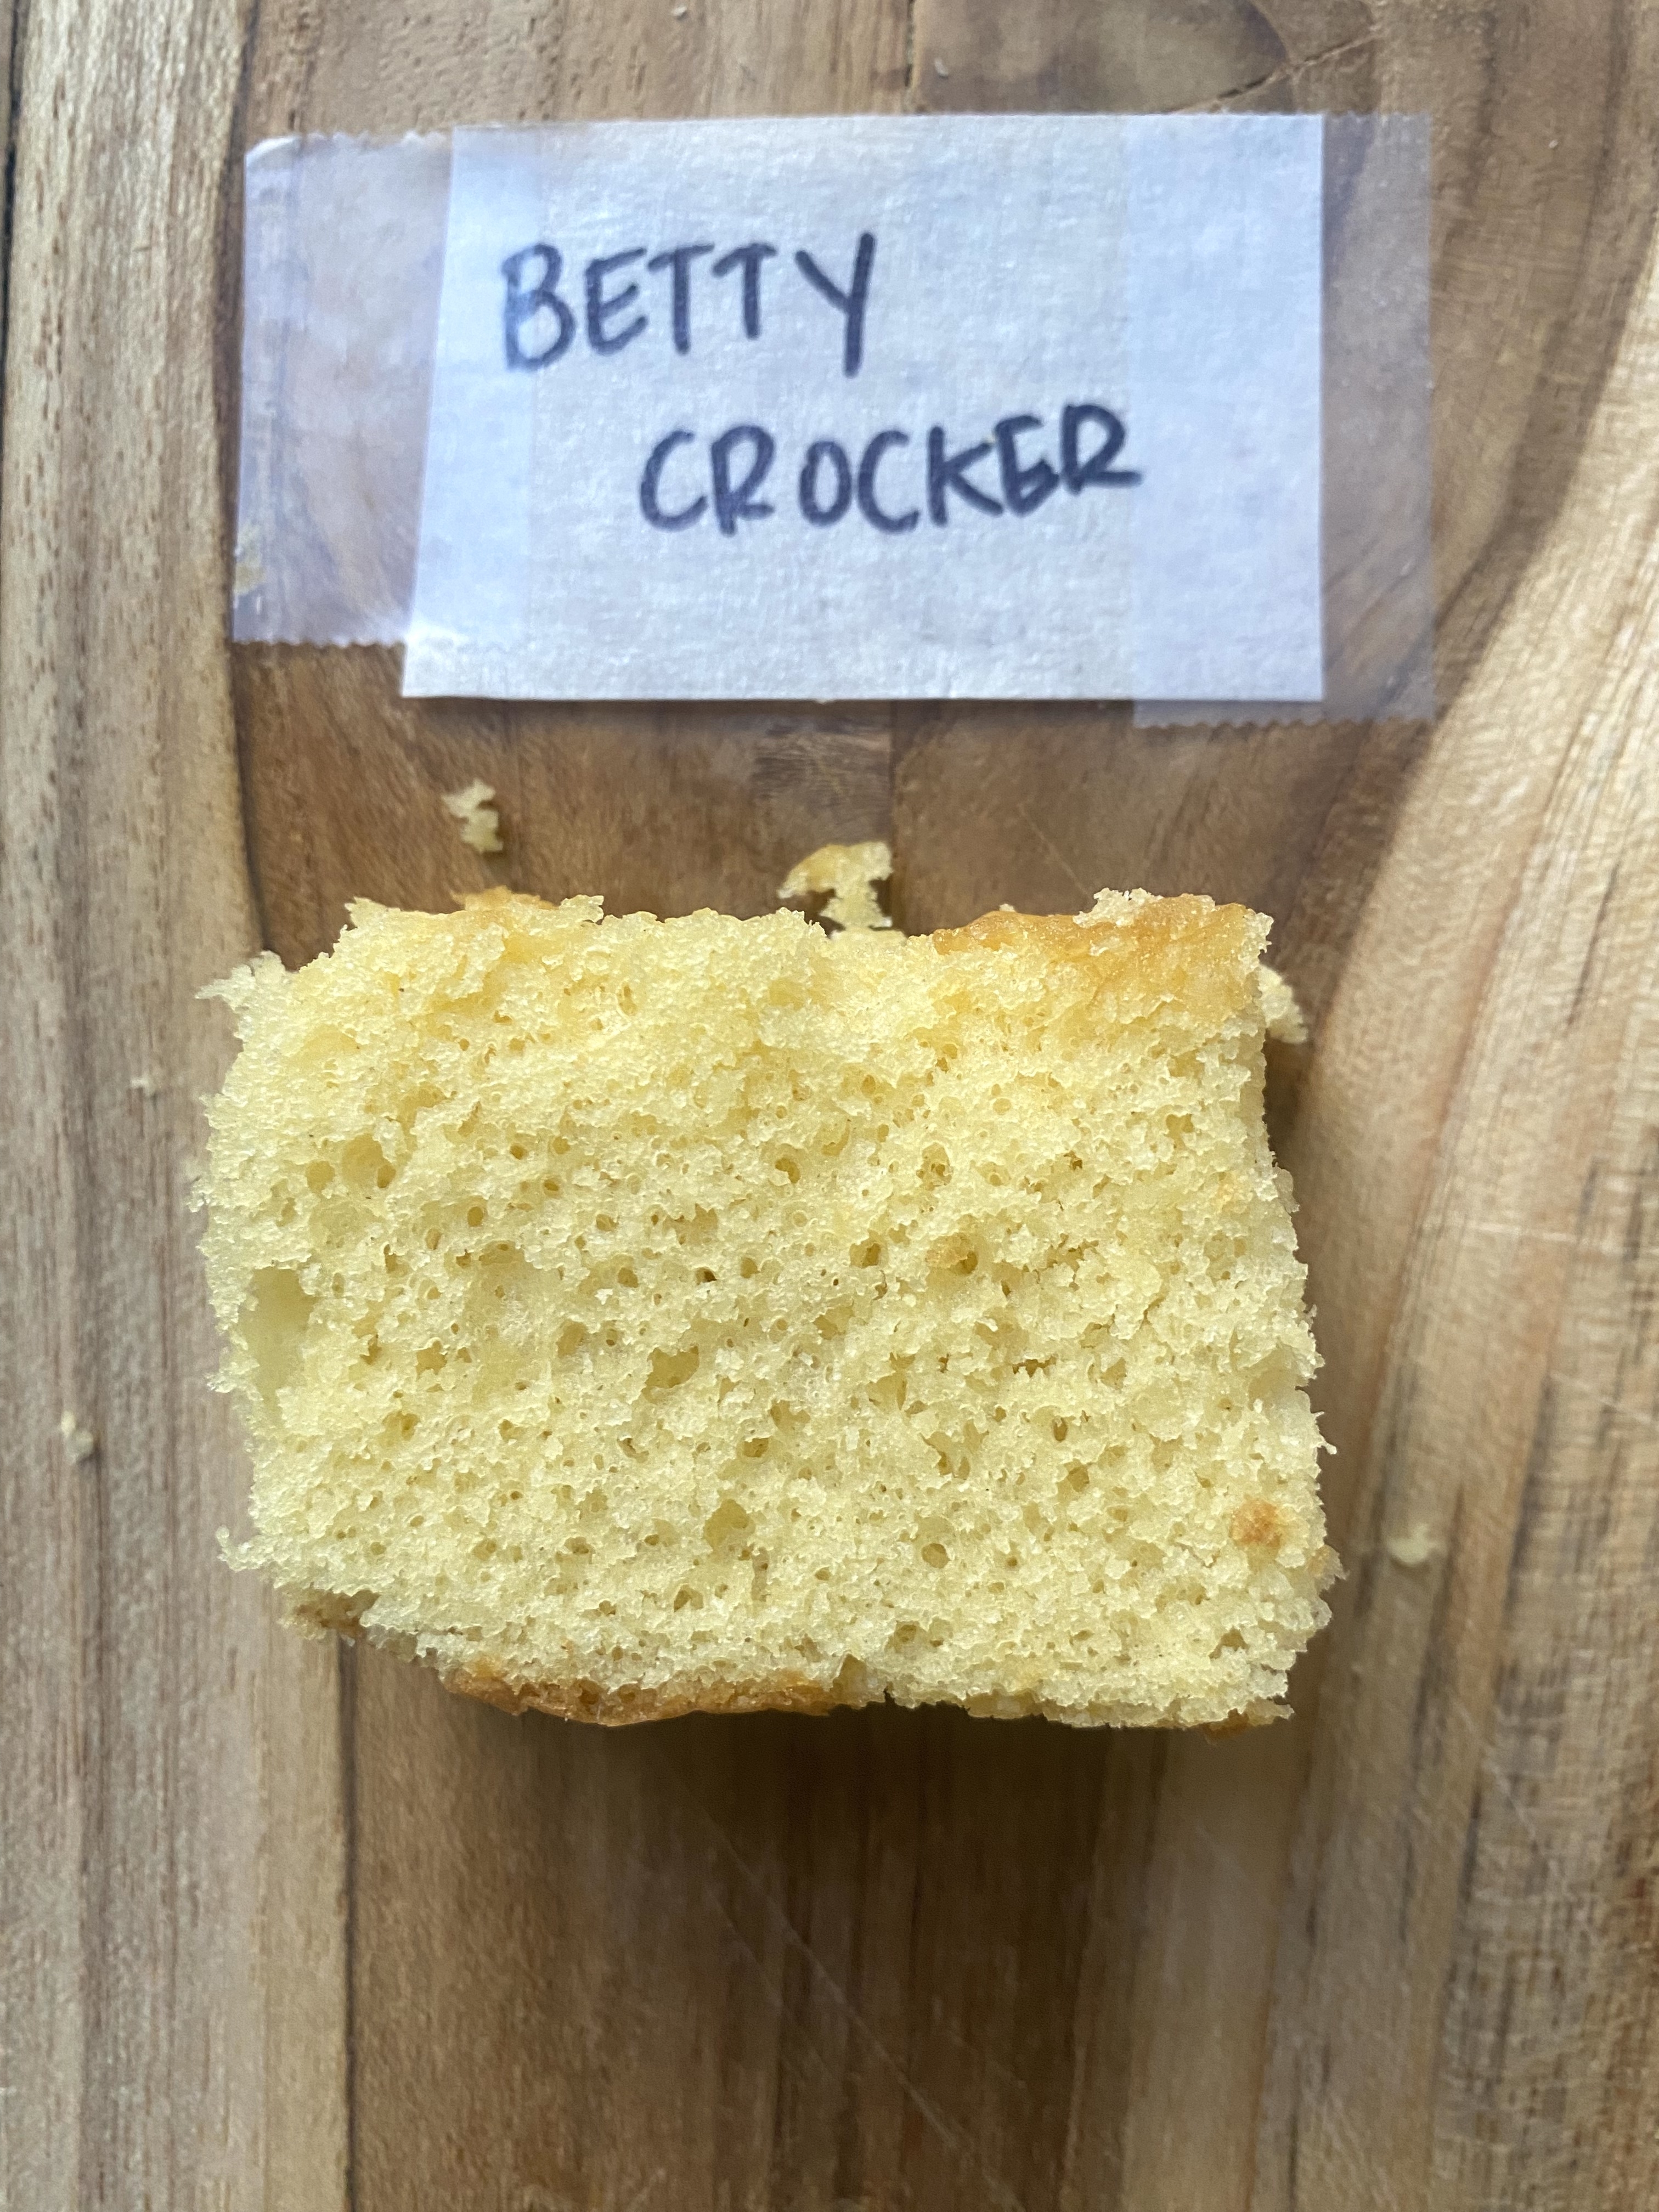 a slice of betty crocker cake on a wooden cutting board